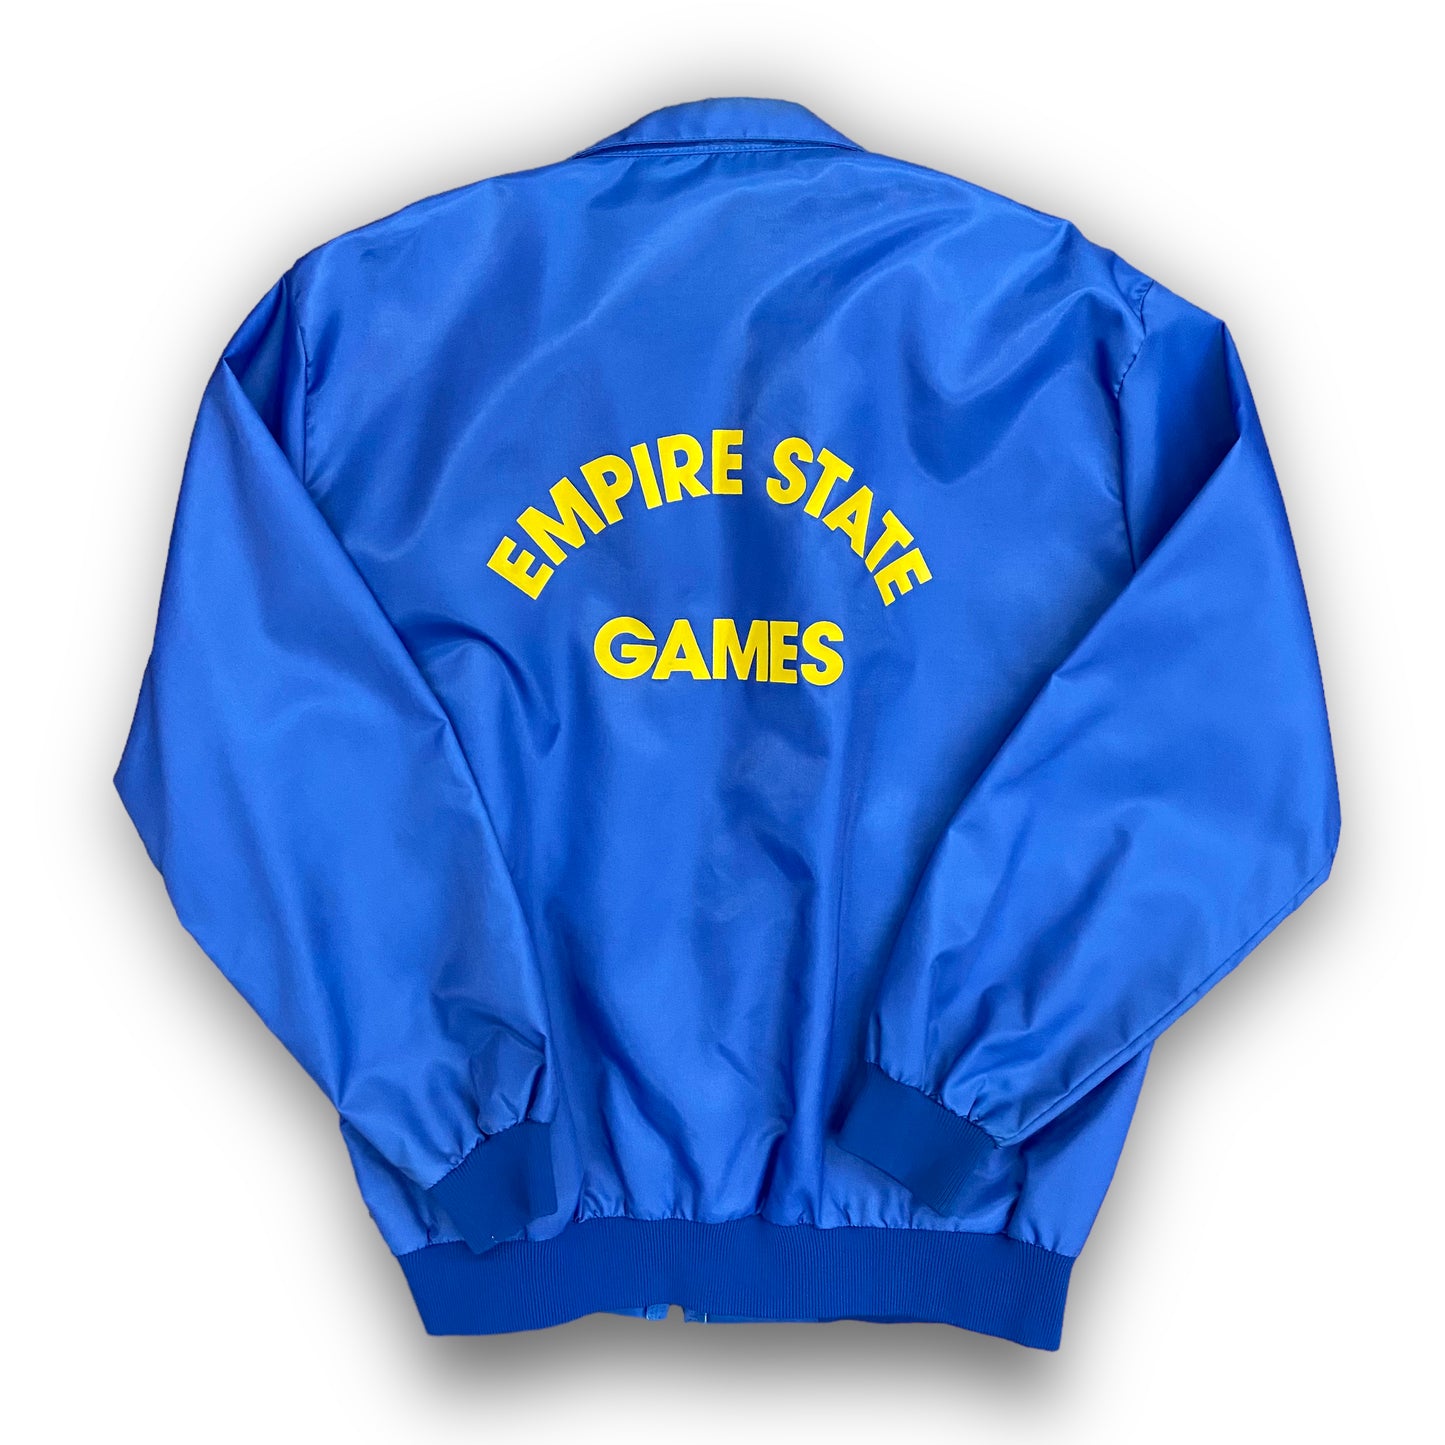 Vintage 1989 Empire State Games: Ithaca Blue Windbreaker Jacket - Size XL